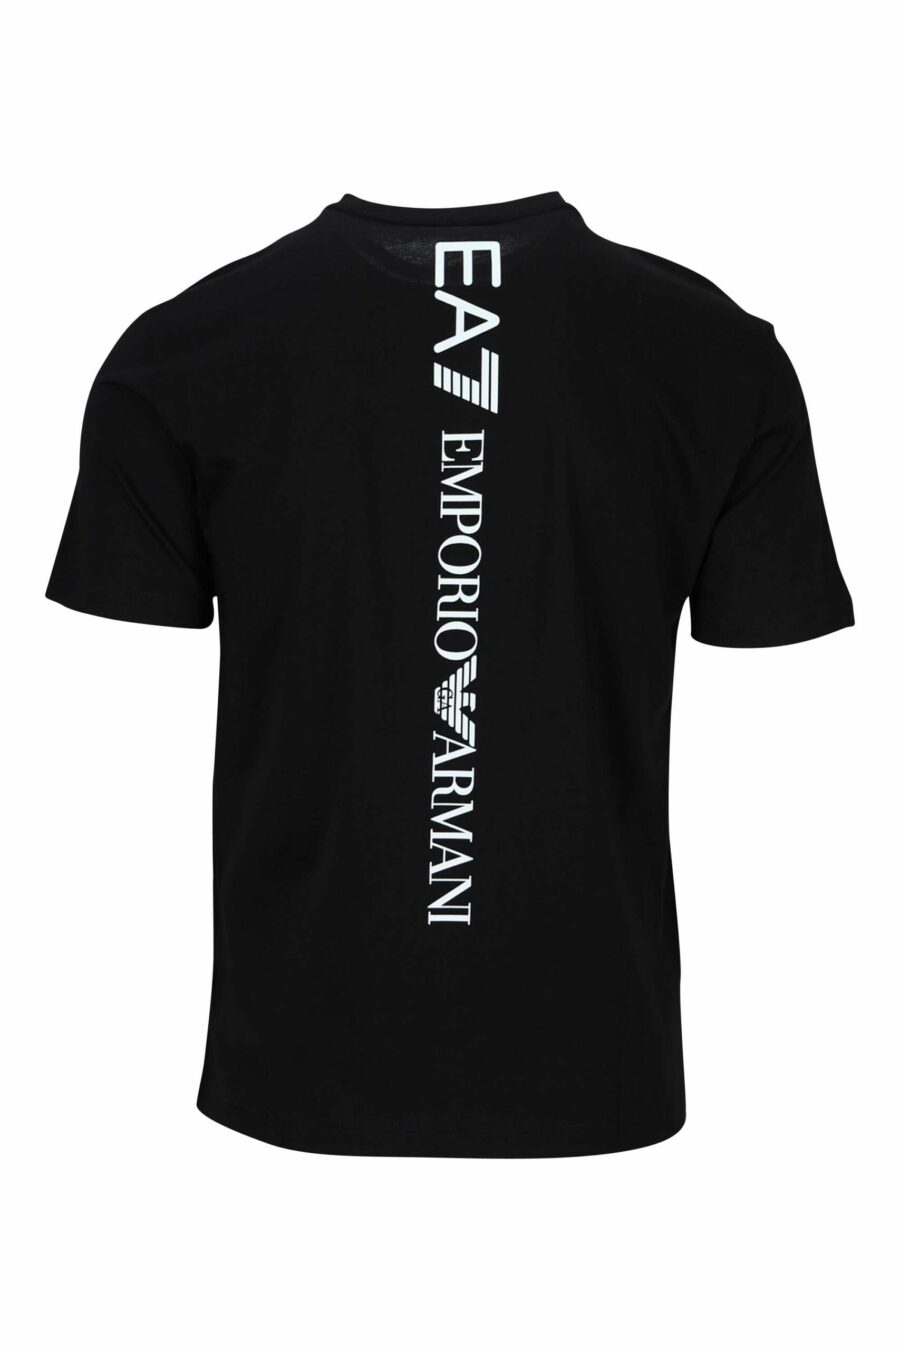 Camiseta negra con maxilogo "lux identity" vertical detrás - 8058947452668 1 scaled